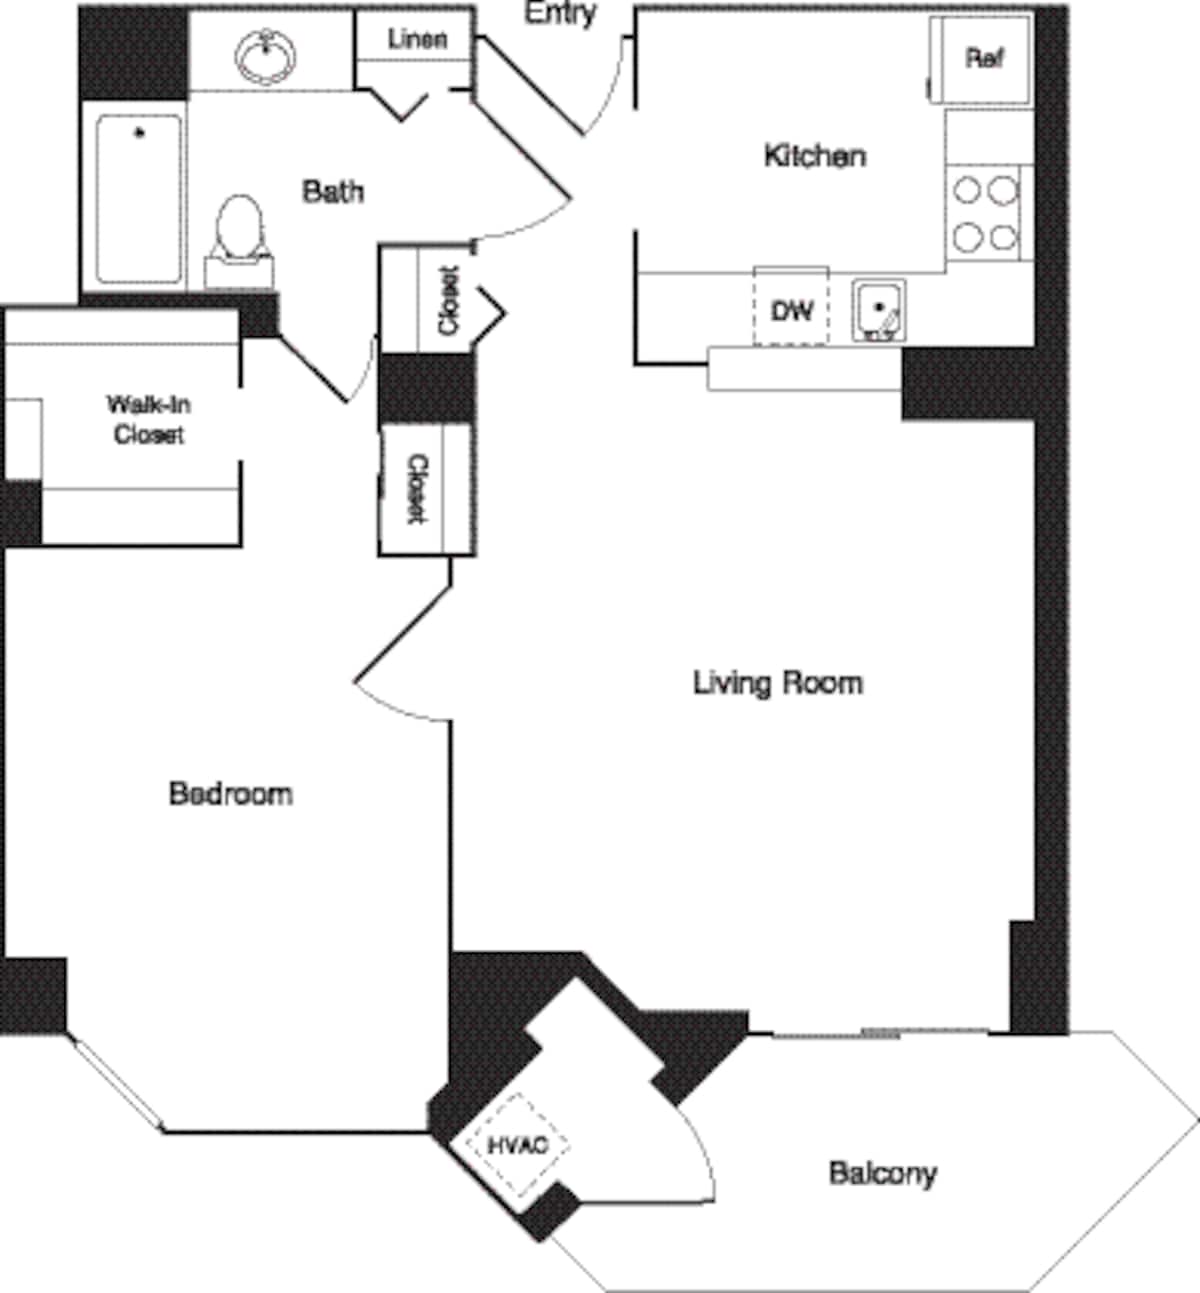 Floorplan diagram for Palm (D), showing 1 bedroom